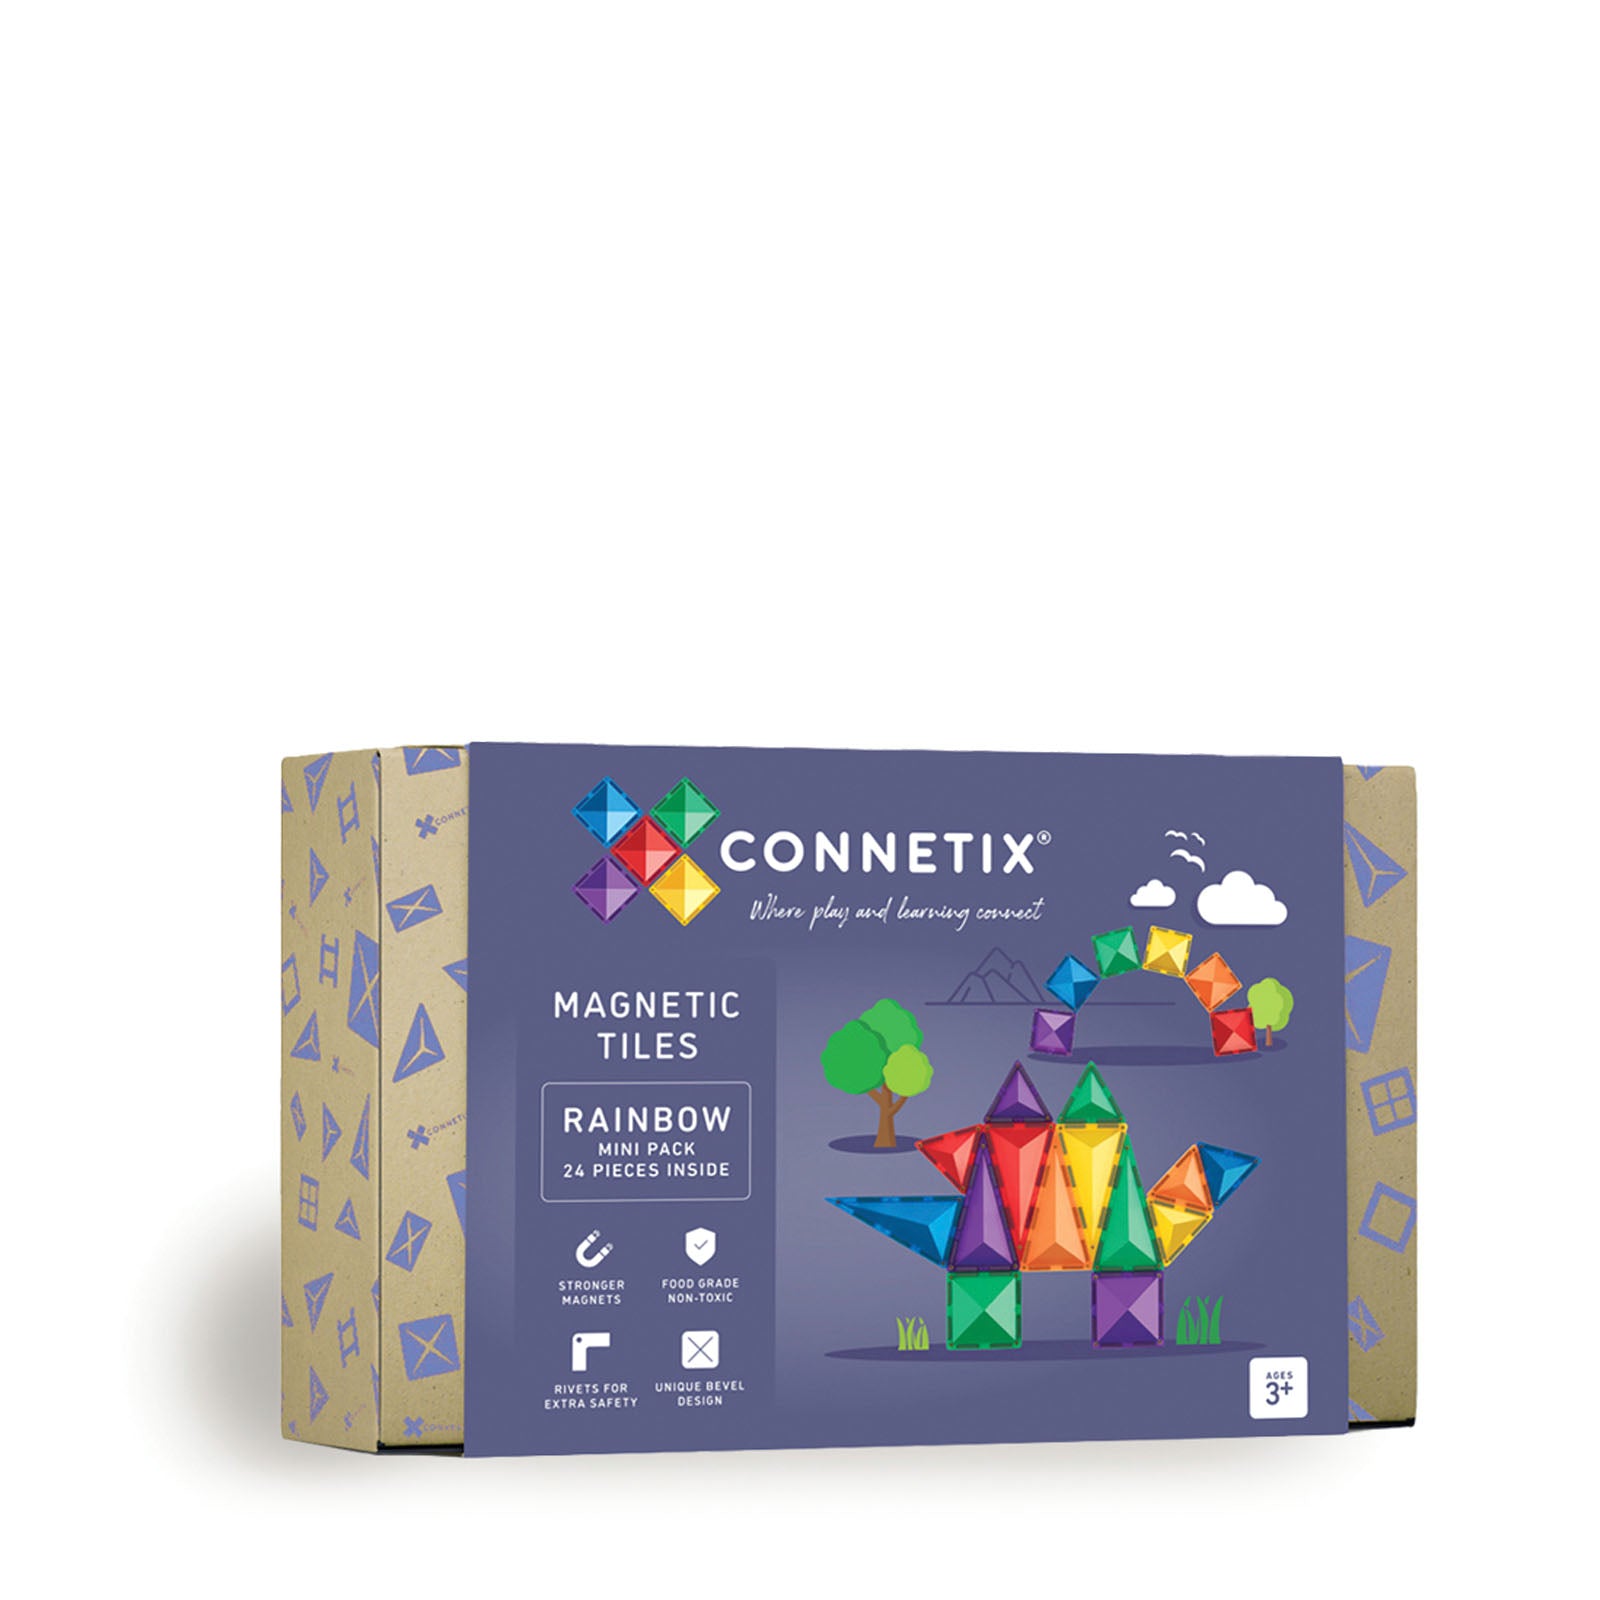 Magnetic Tiles Rainbow Mini Pack - 24 Pieces